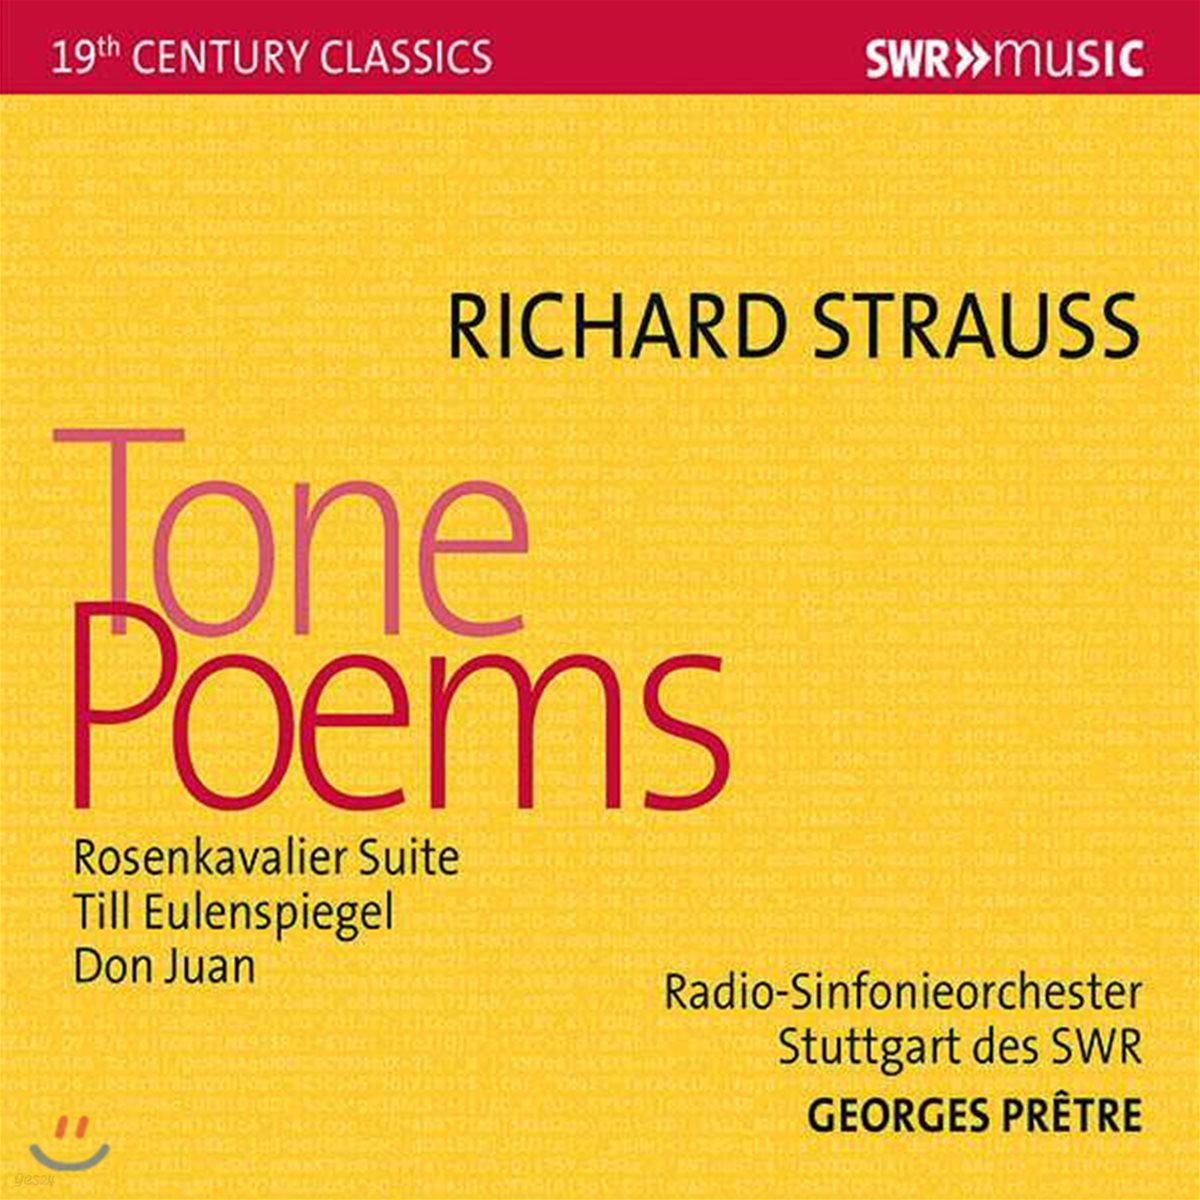 Georges Pretre 슈트라우스: 틸 오일렌슈피겔의 유쾌한 장난, 돈 주앙, 장미의 기사 모음곡 (R. Strauss: Tone Poems)